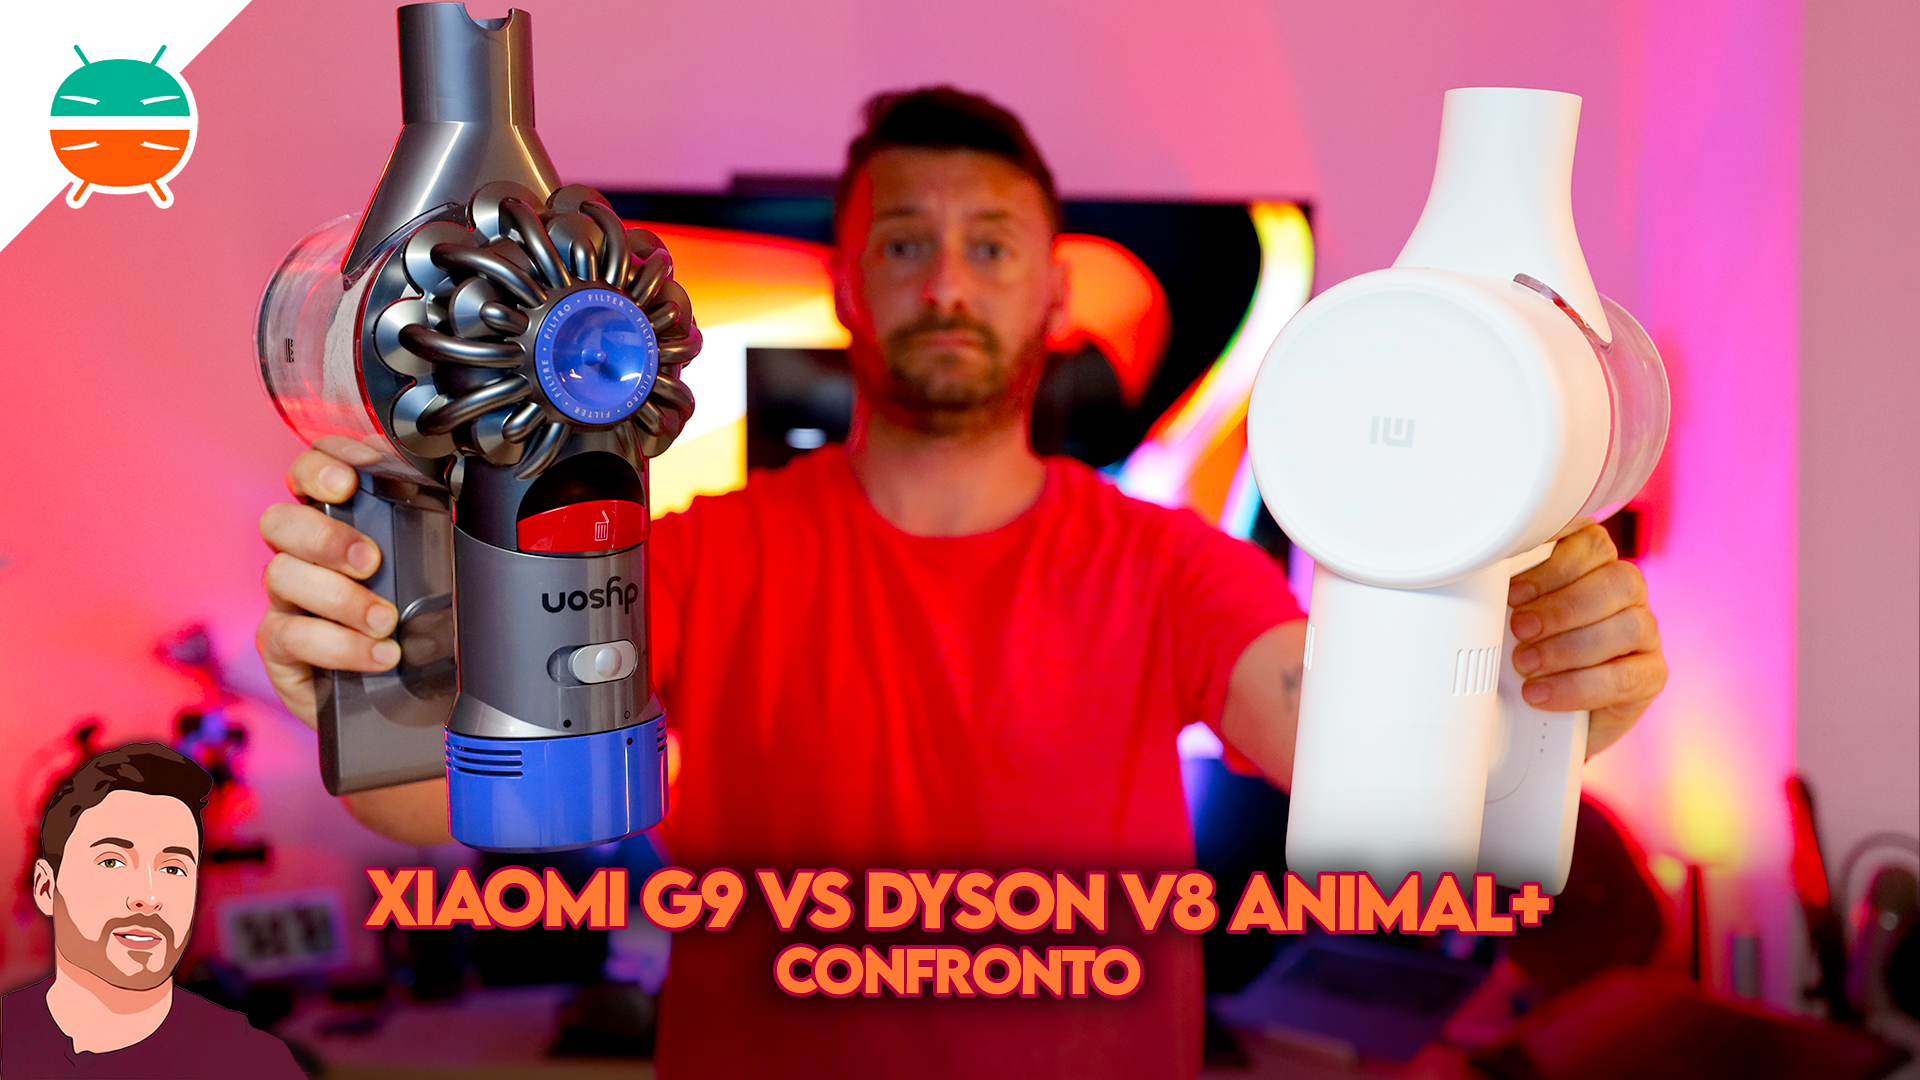 Дайсон ксиаоми. Xiaomi Vacuum Cleaner g9 Plus. Пылесос Ксиаоми или Дайсон. Dyson v8 animal+.